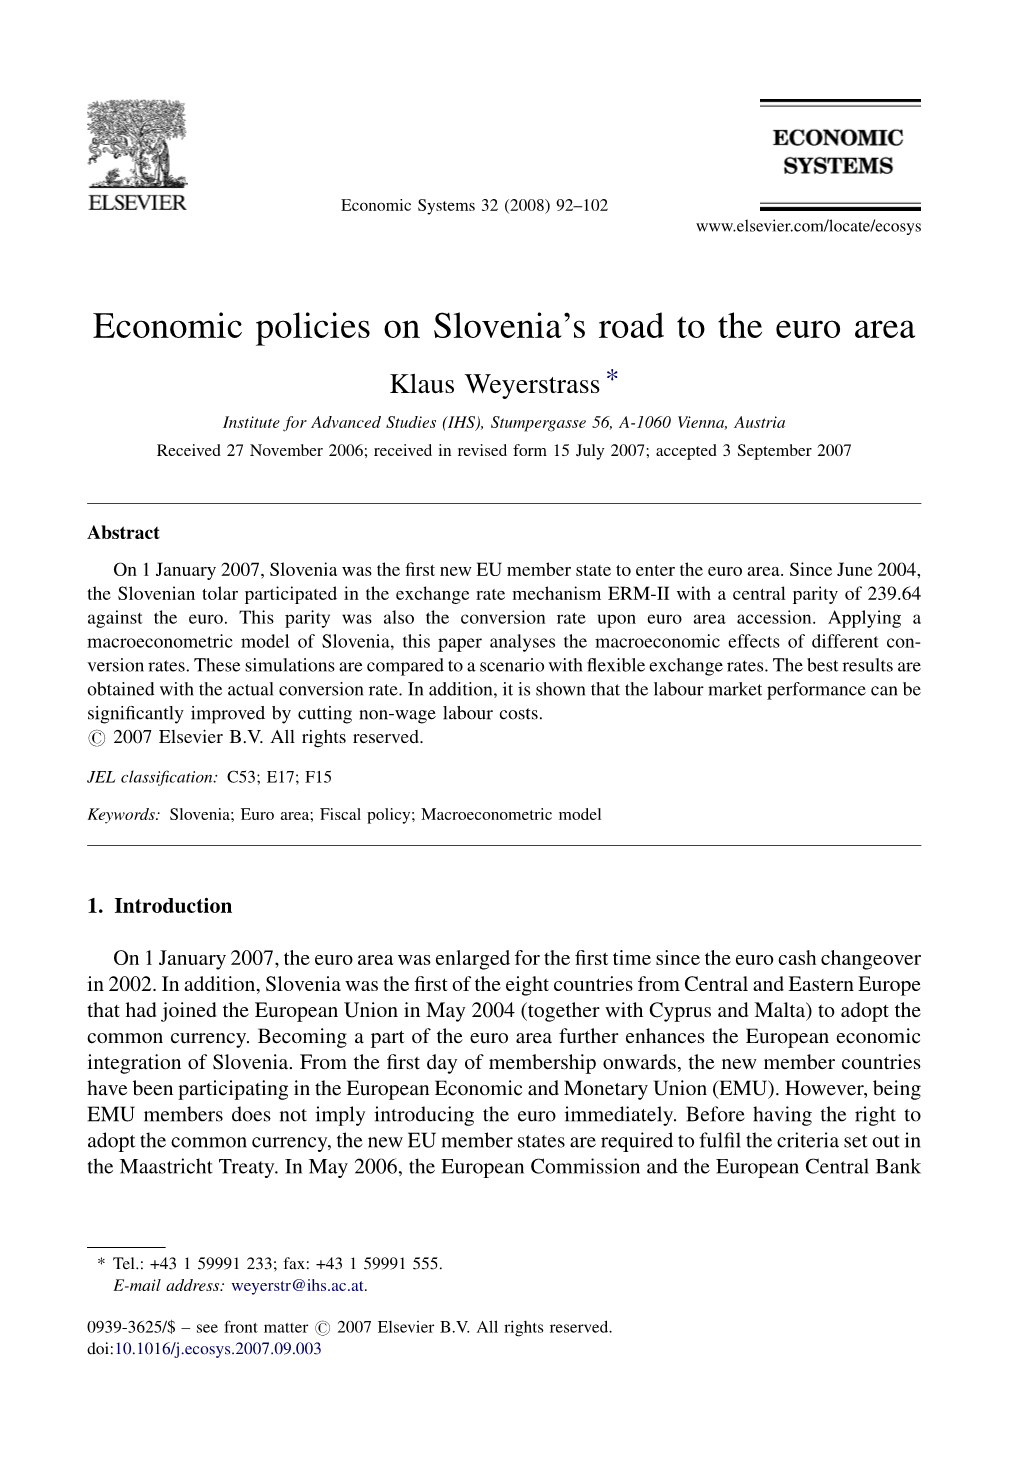 Economic Policies on Slovenia's Road to the Euro Area